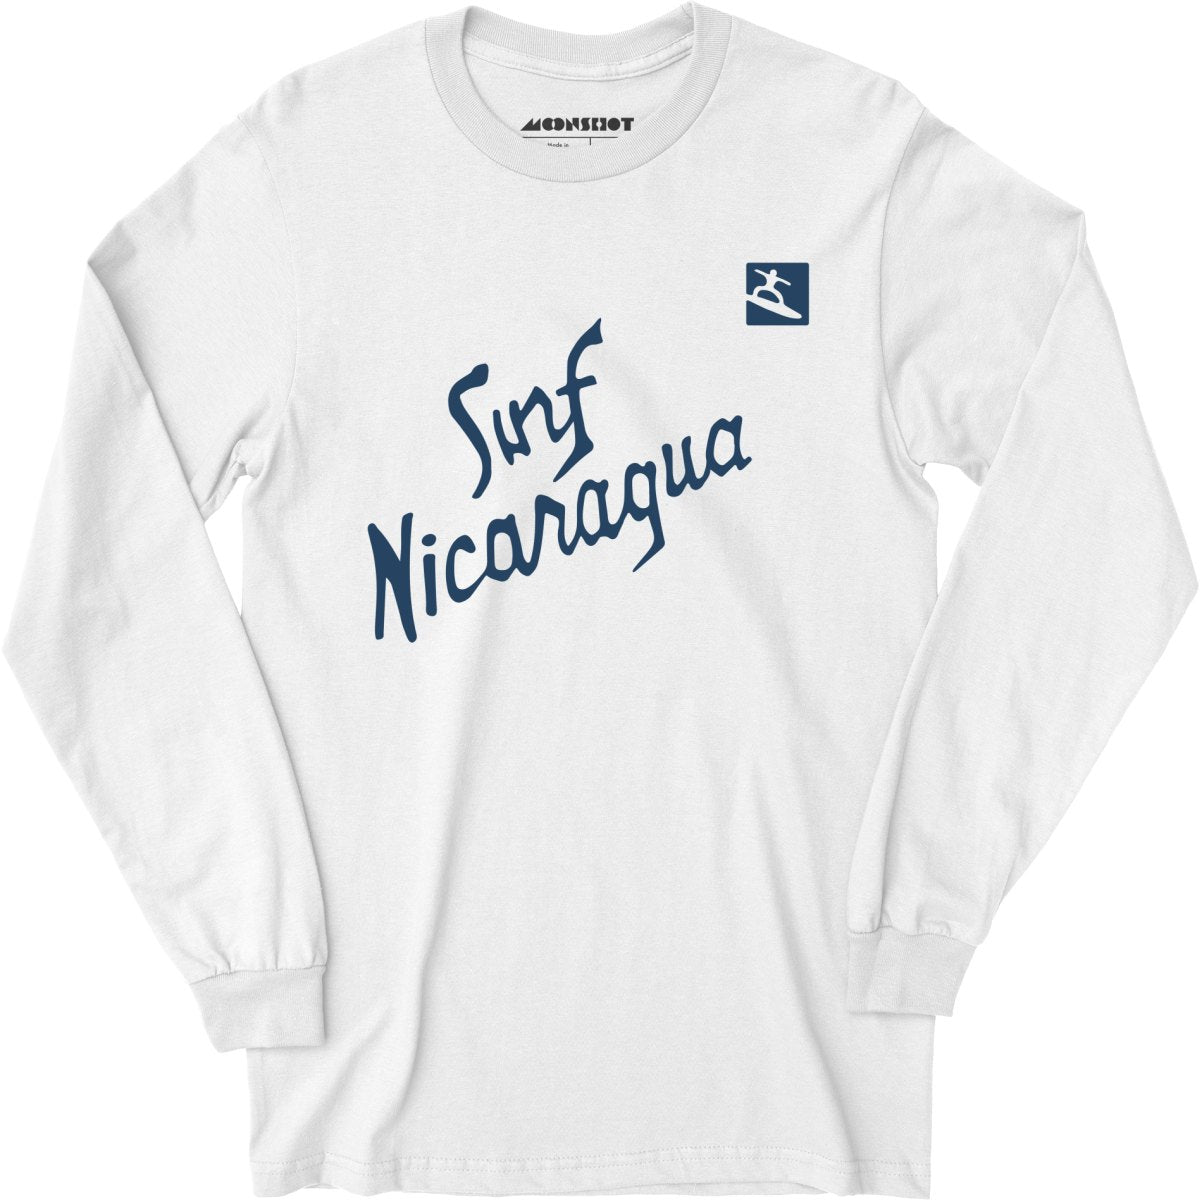 Real Genius - Surf Nicaragua - Long Sleeve T-Shirt